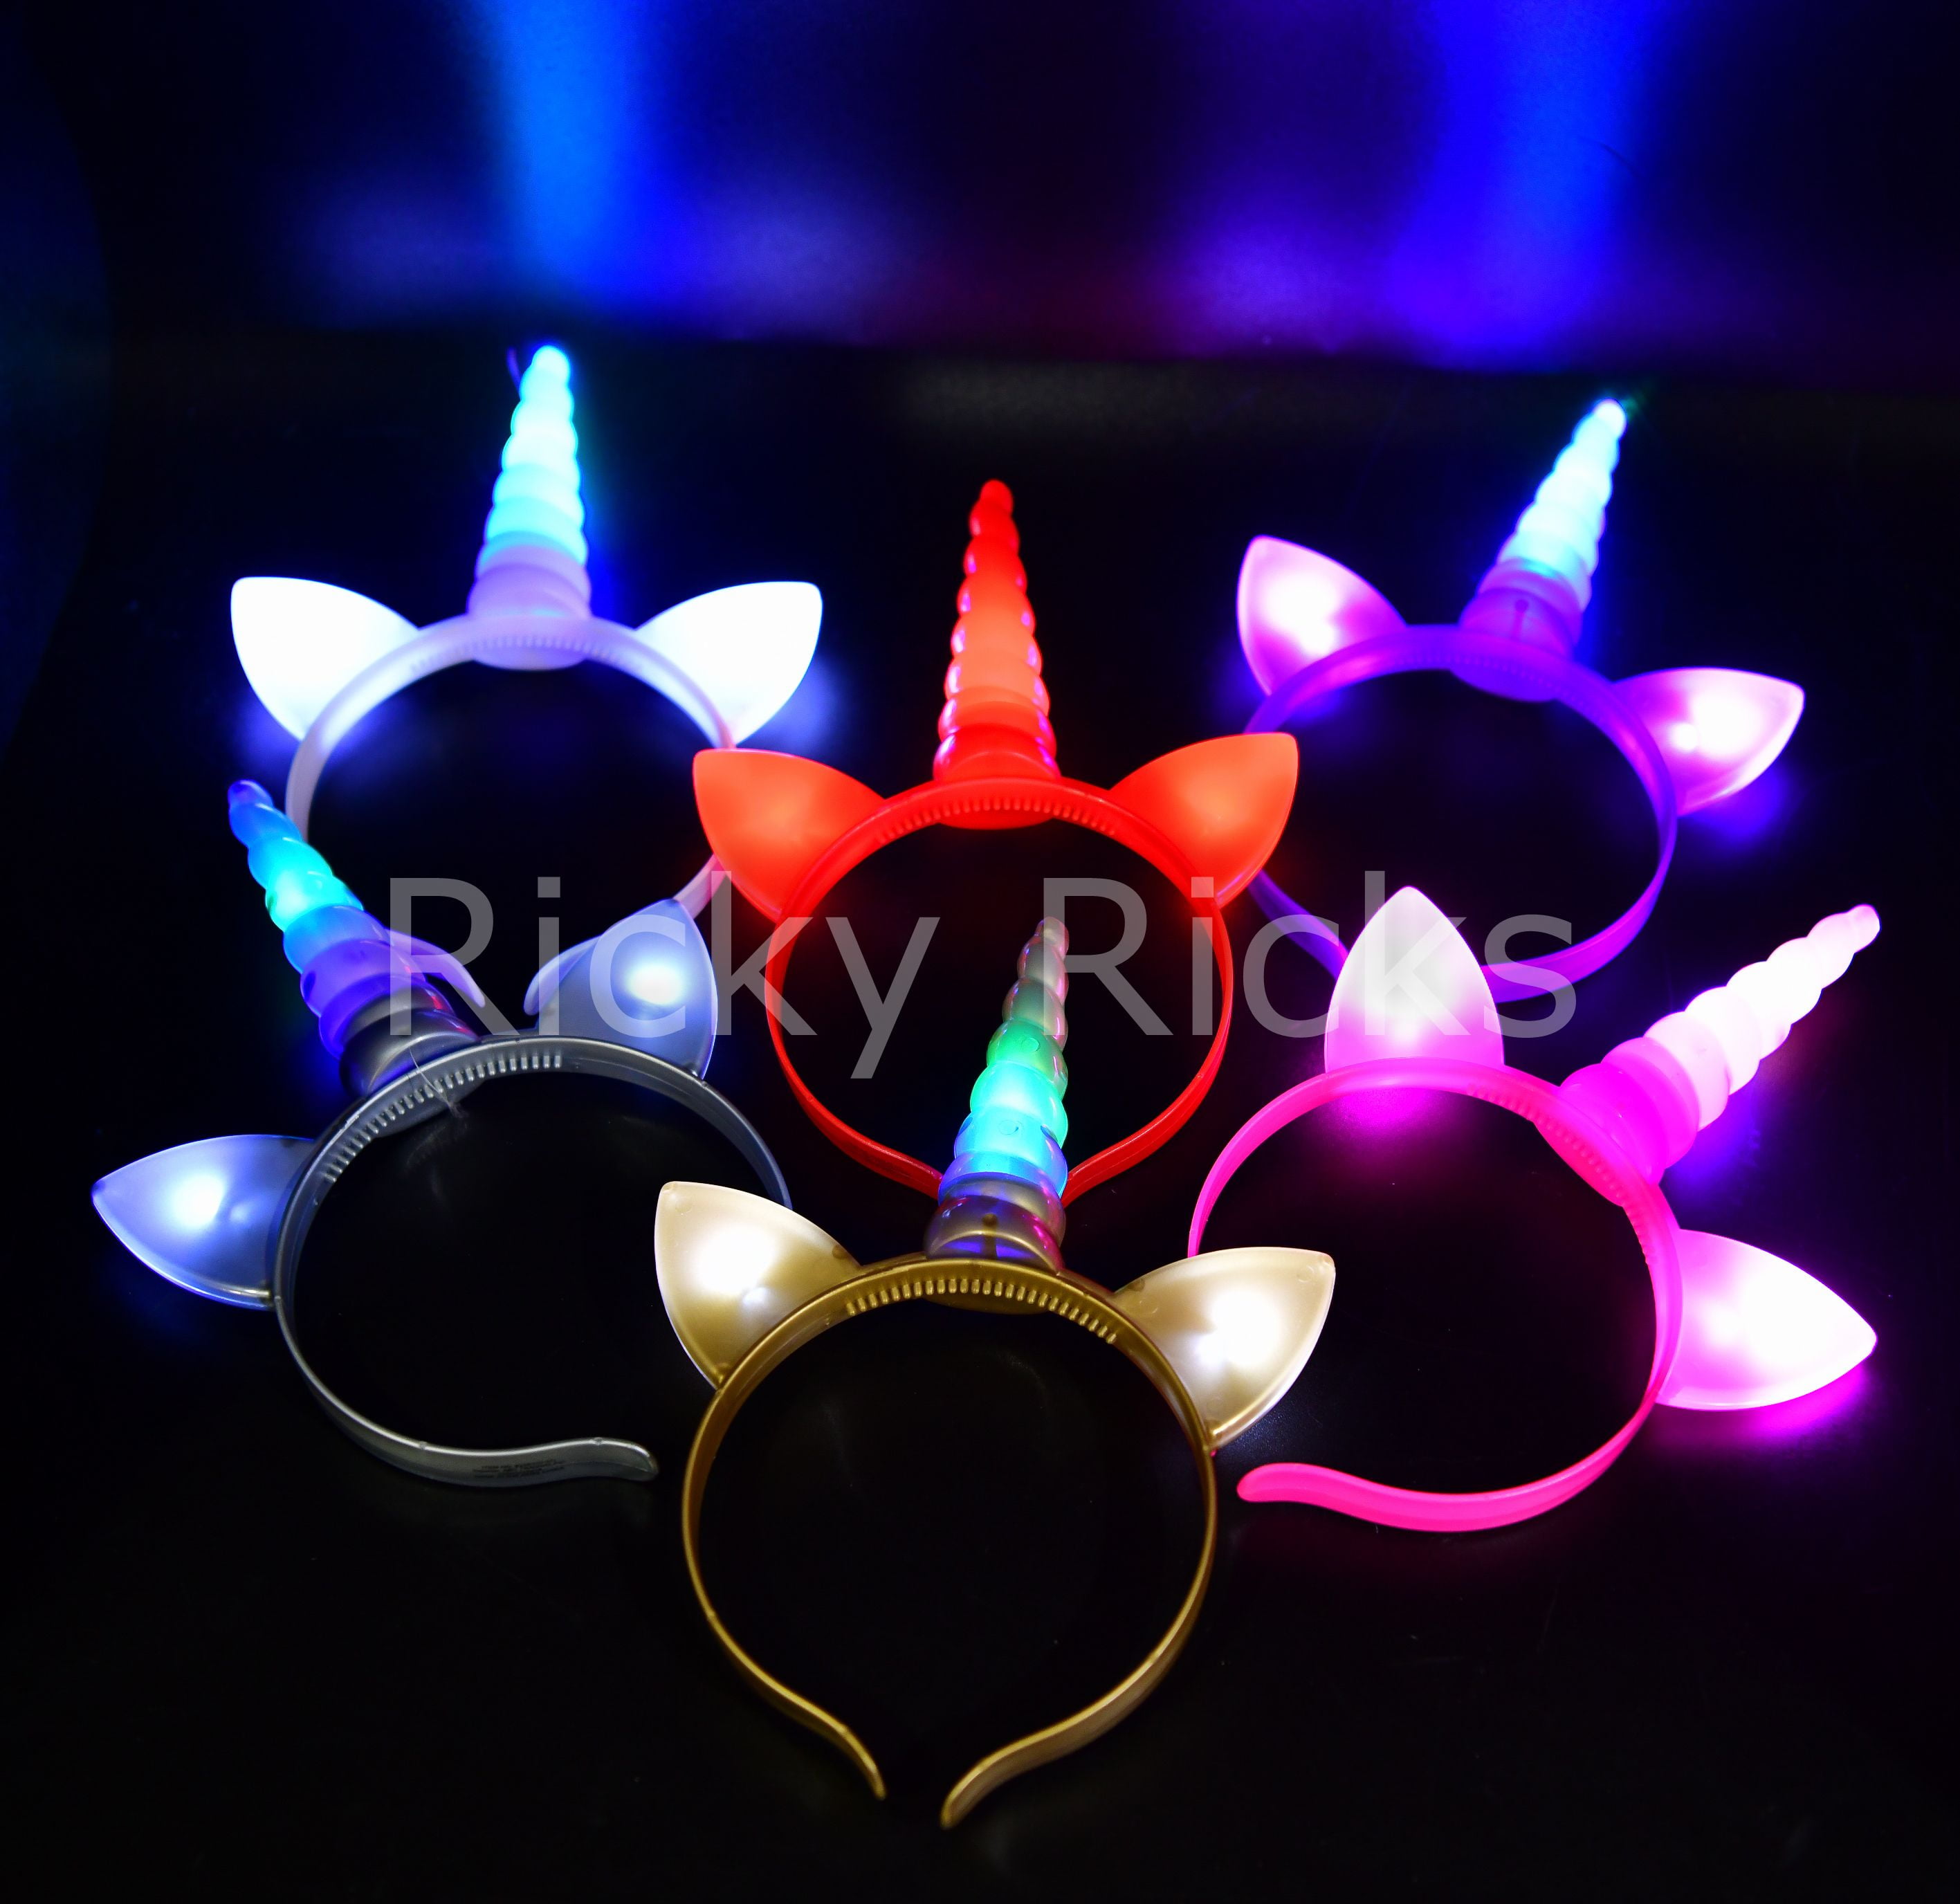 LED Flashing Unicorn Horn Light Up Headbands Hair Cosplay Costume Party Kid